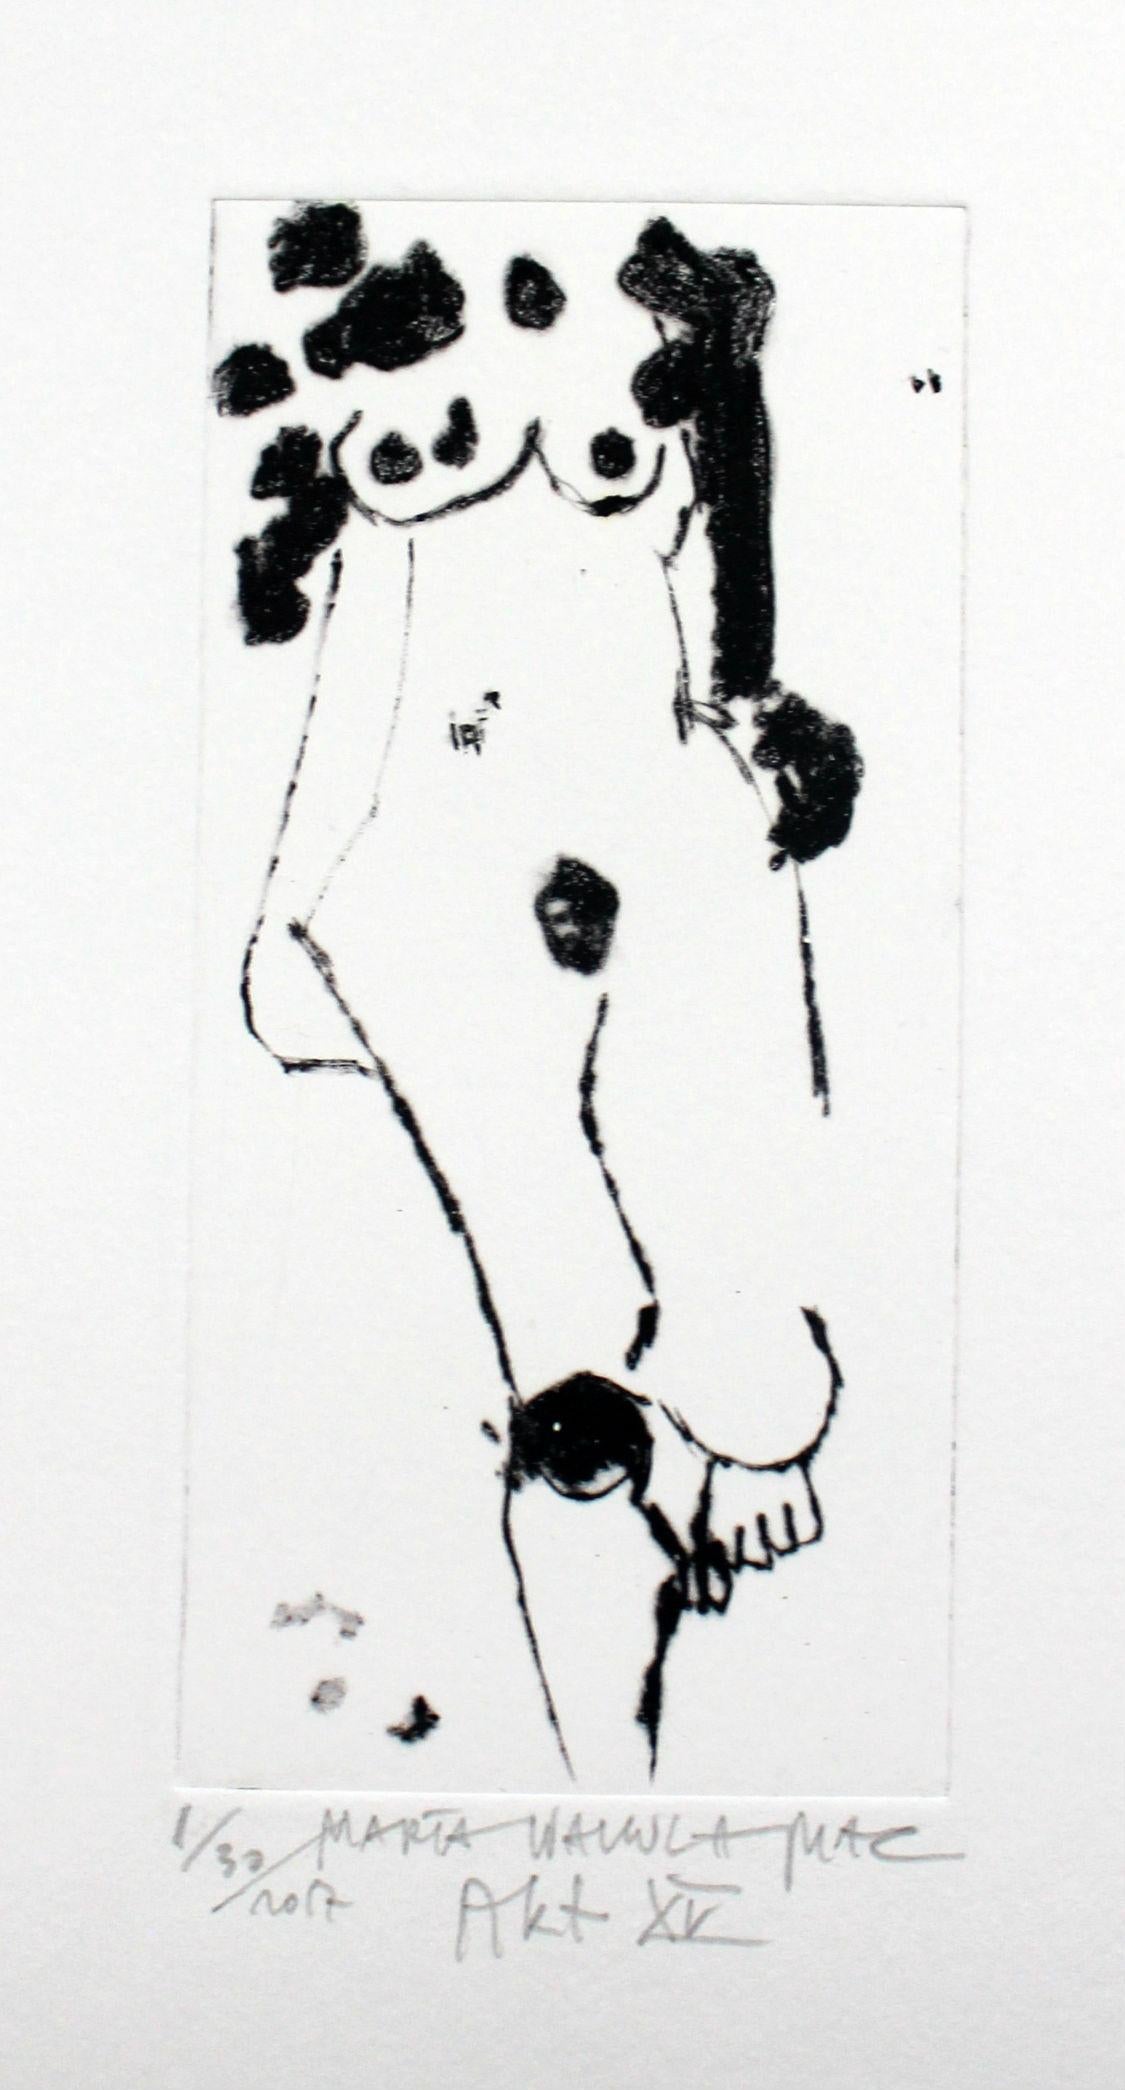 Nude XV - XXI Century, Contemporary Figurative Drypoint Etching Print - Gray Figurative Print by Marta Wakula-Mac